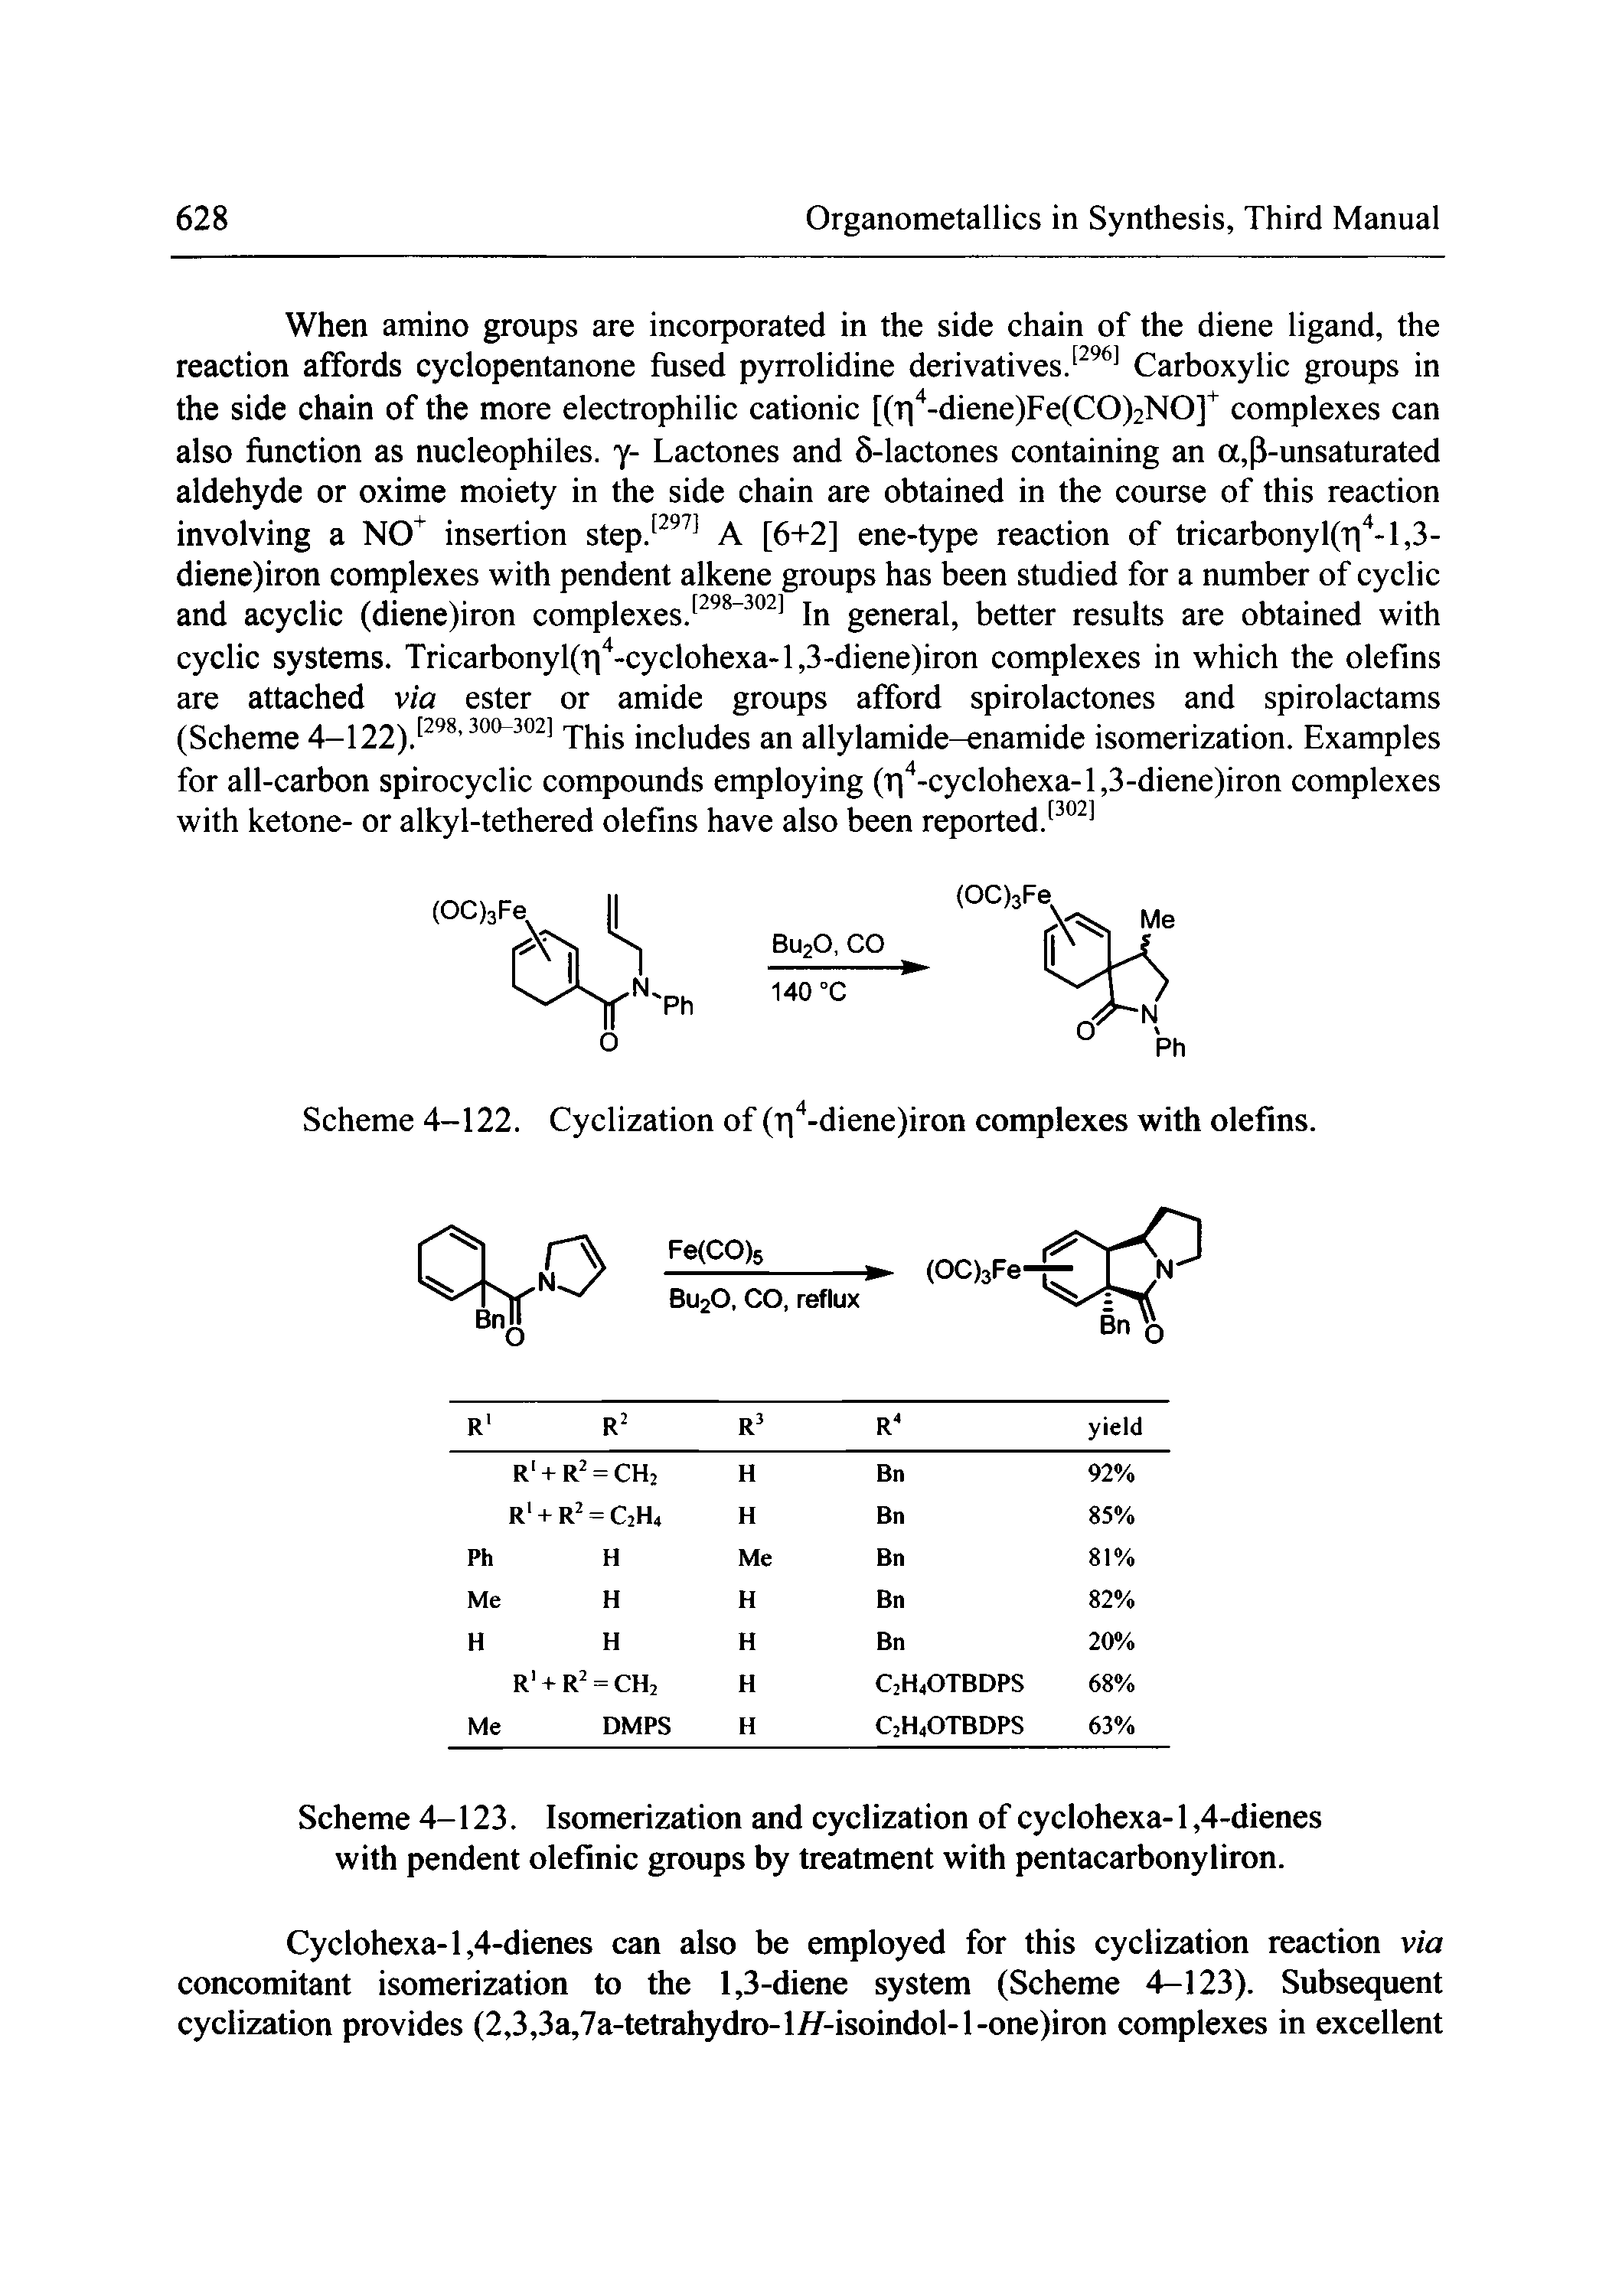 Scheme 4-122. Cyclization of (ri -diene)iron complexes with olefins.